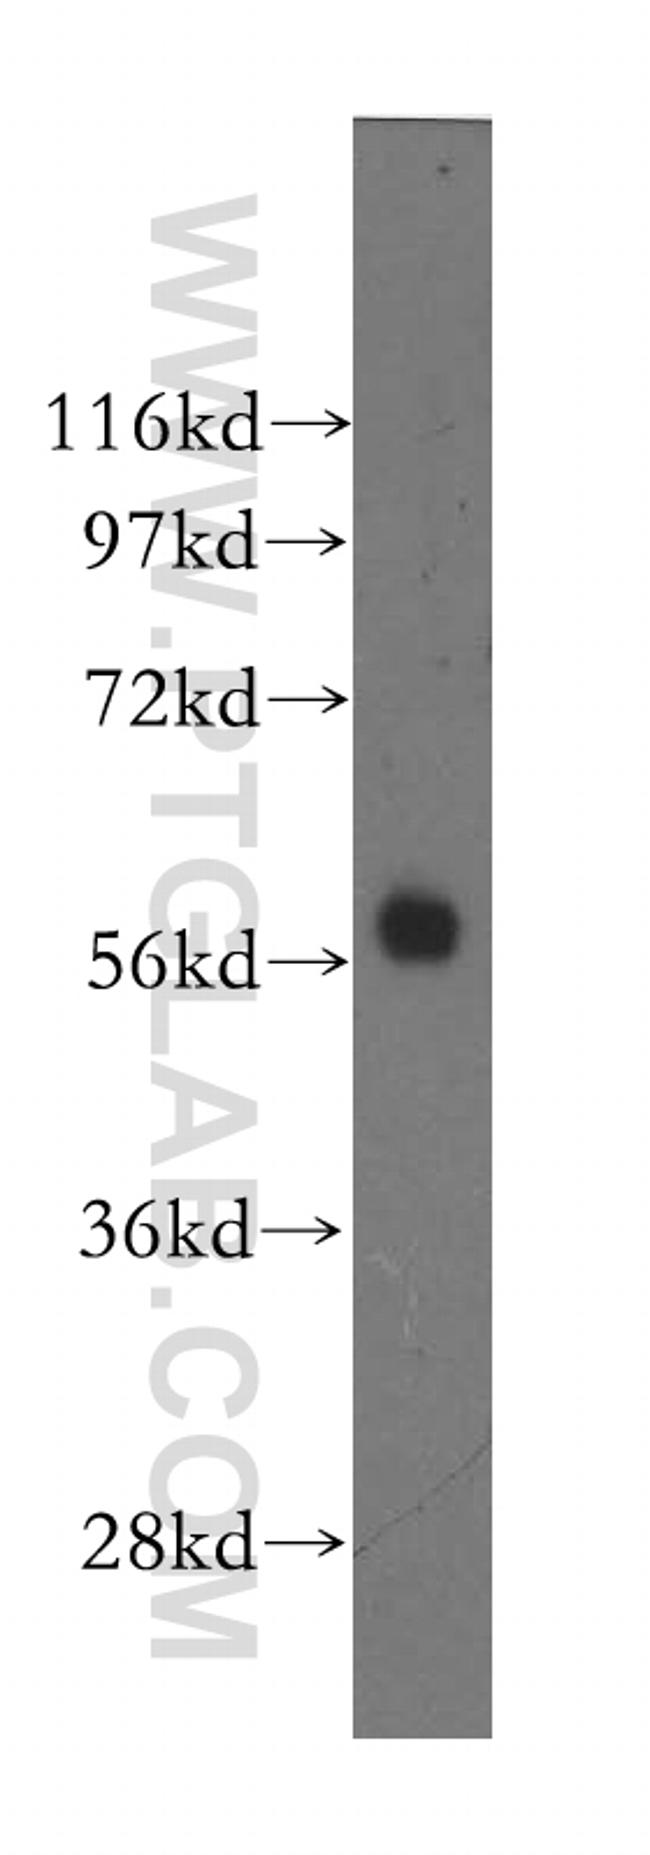 MTMR8 Antibody in Western Blot (WB)